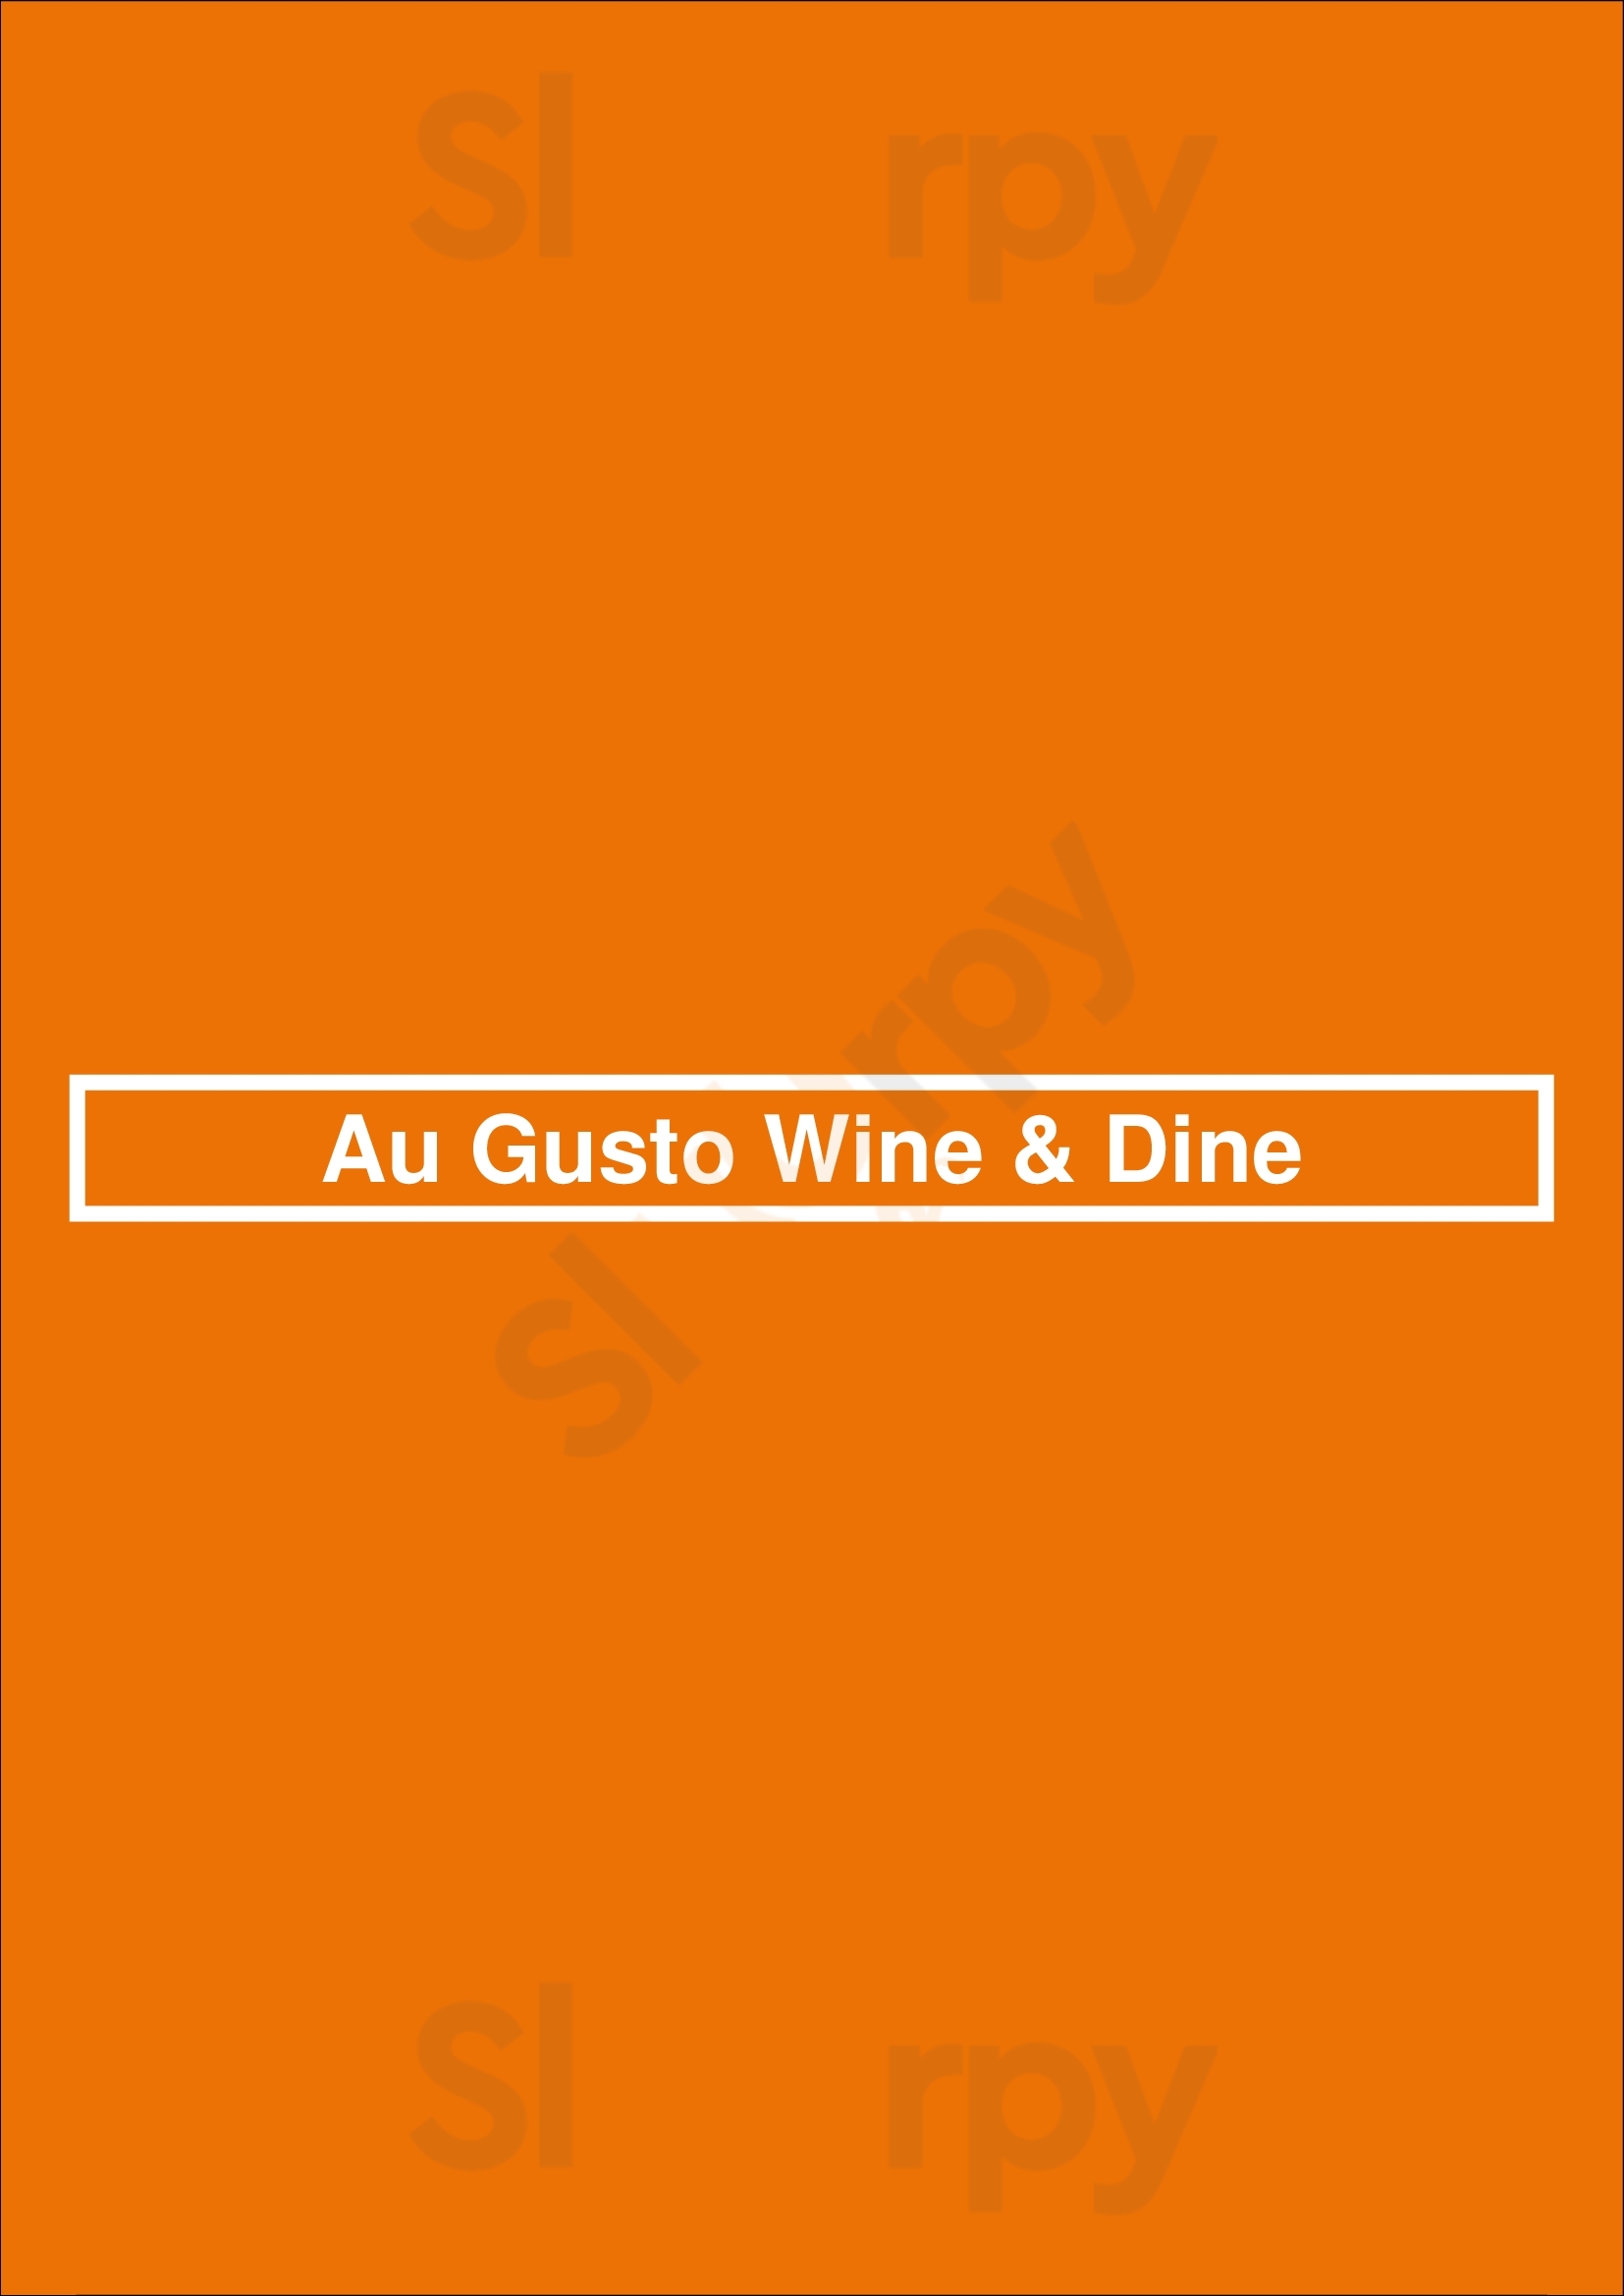 Au Gusto Wine & Dine Bruges Menu - 1